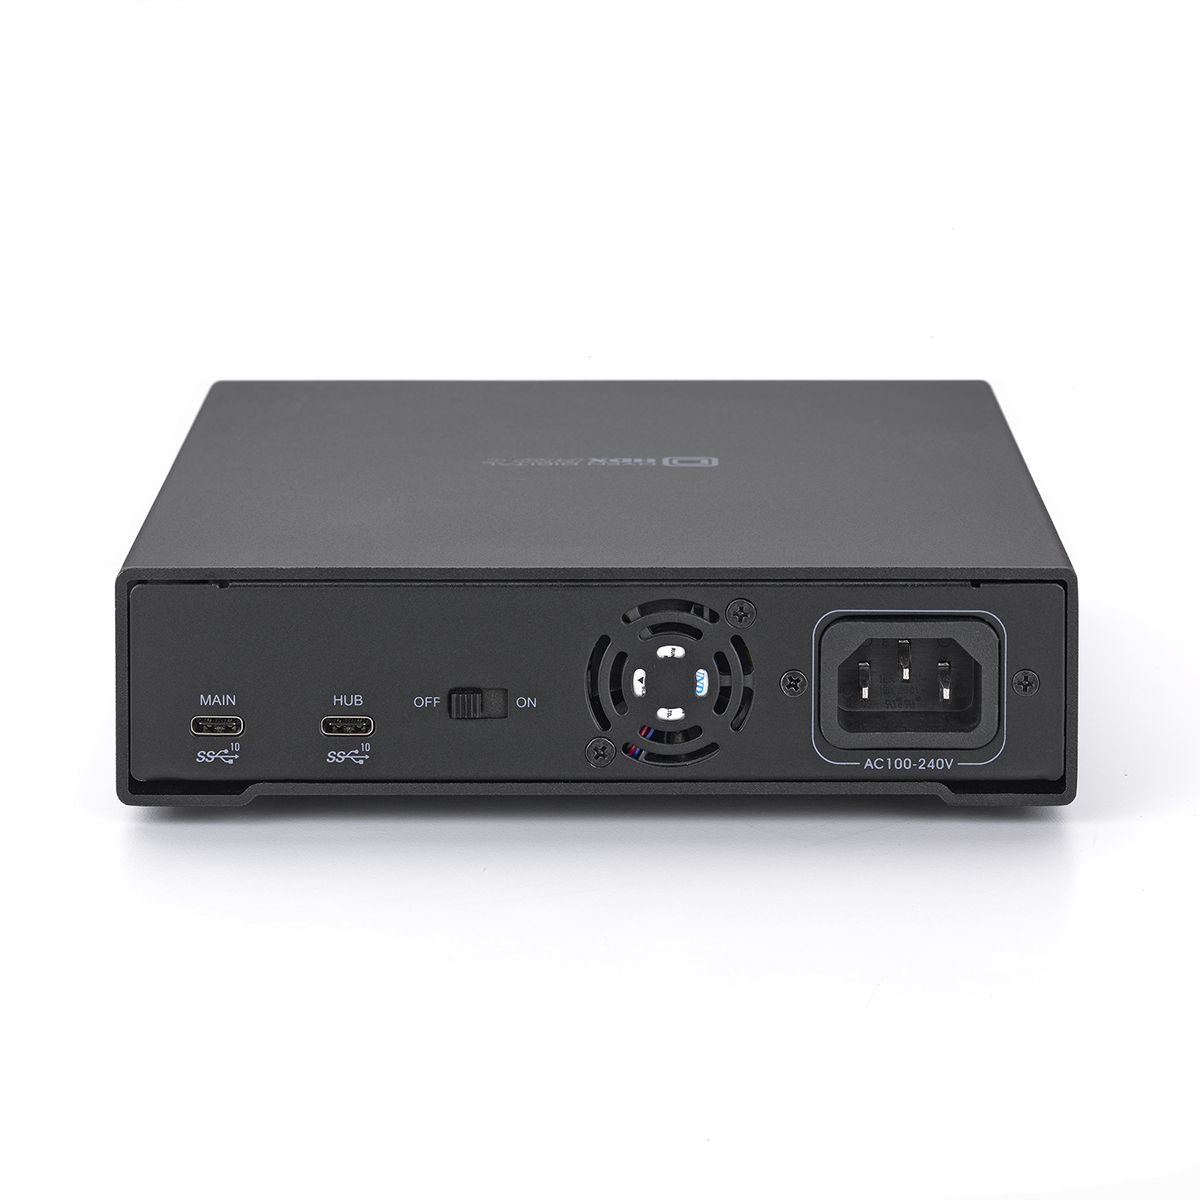 Oyen Digital: HDX Pro C USB-C External Hard Drive